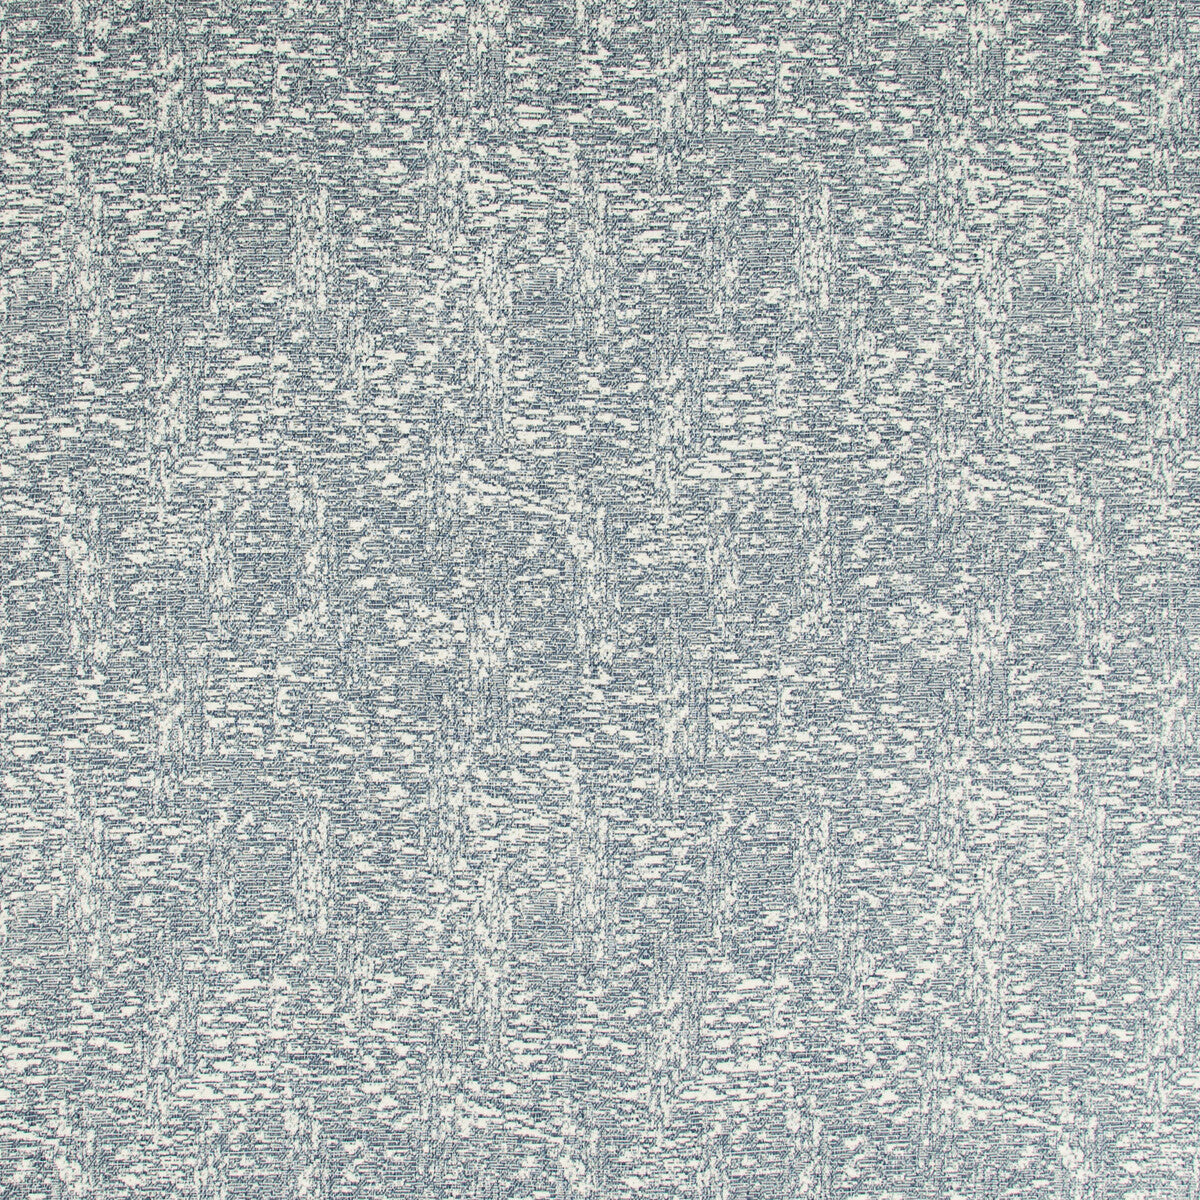 Lj Grw fabric - pattern 2019146.15.0 - by Lee Jofa Modern in the Kw Terra Firma III Indoor Outdoor collection